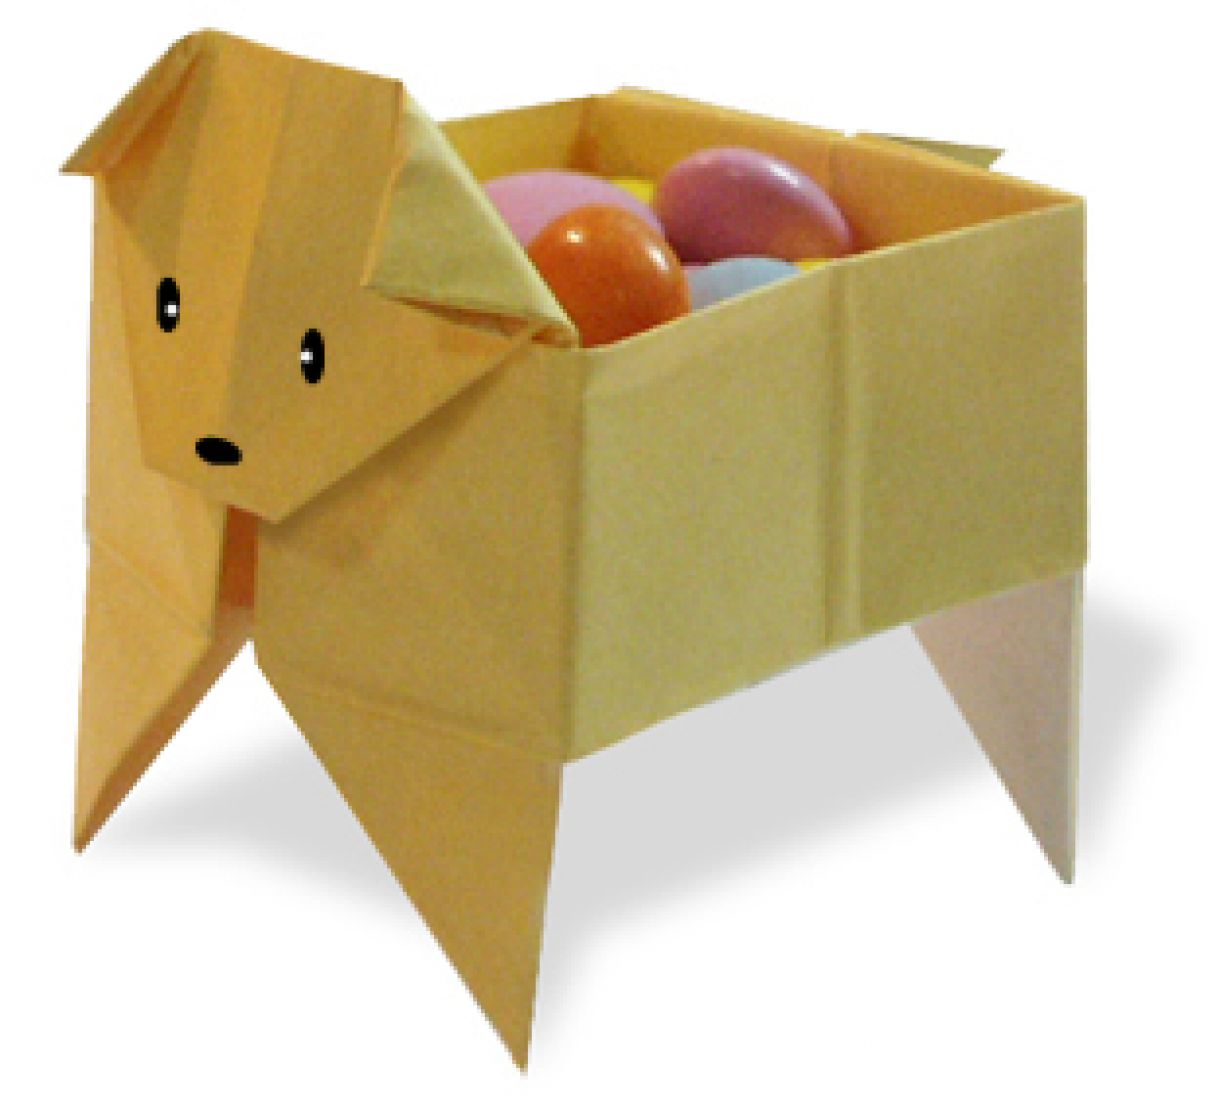 Origami Gift Box Shaped Like A Dog